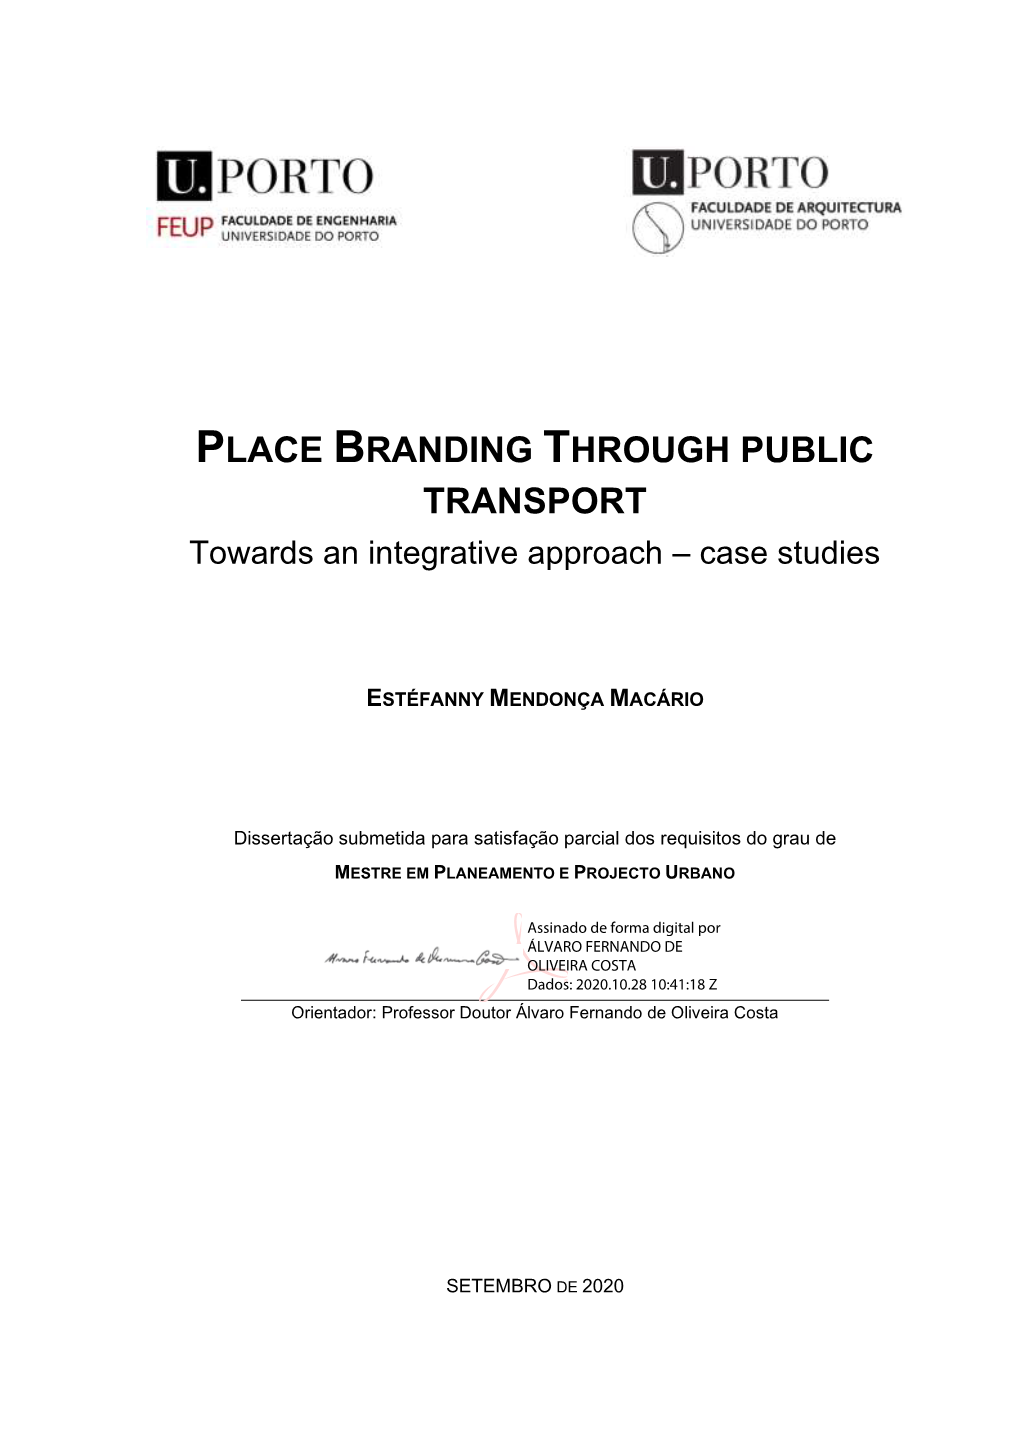 PLACE BRANDING THROUGH PUBLIC TRANSPORT Towards an Integrative Approach – Case Studies